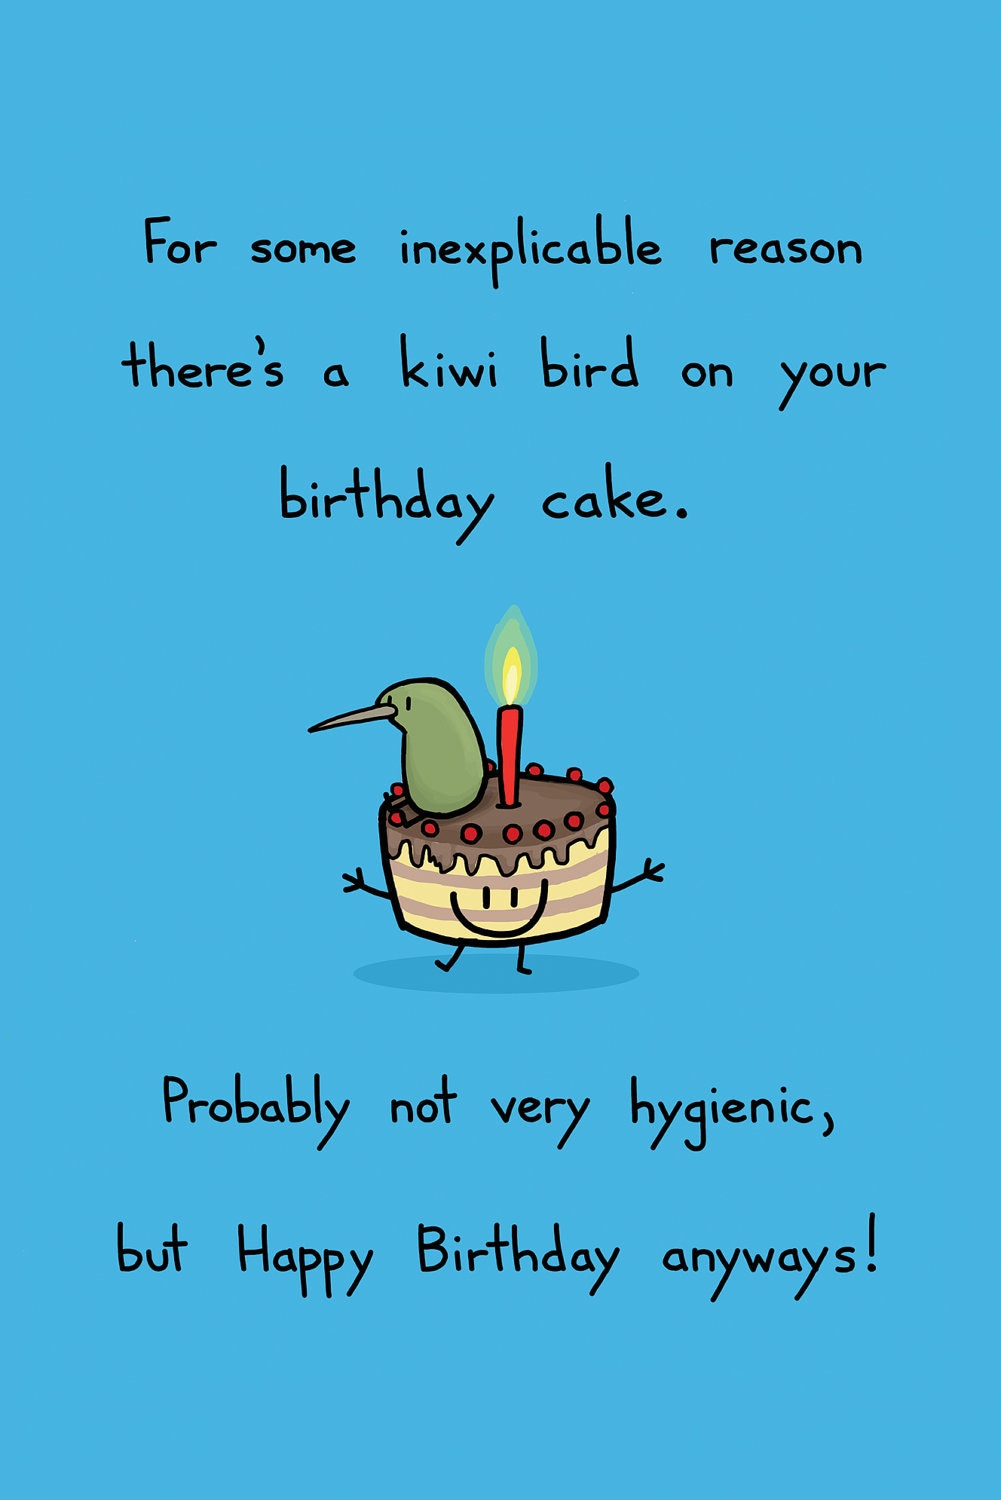 Happy Birthday Kiwi on Your Cake Greeting Card by bikeparts